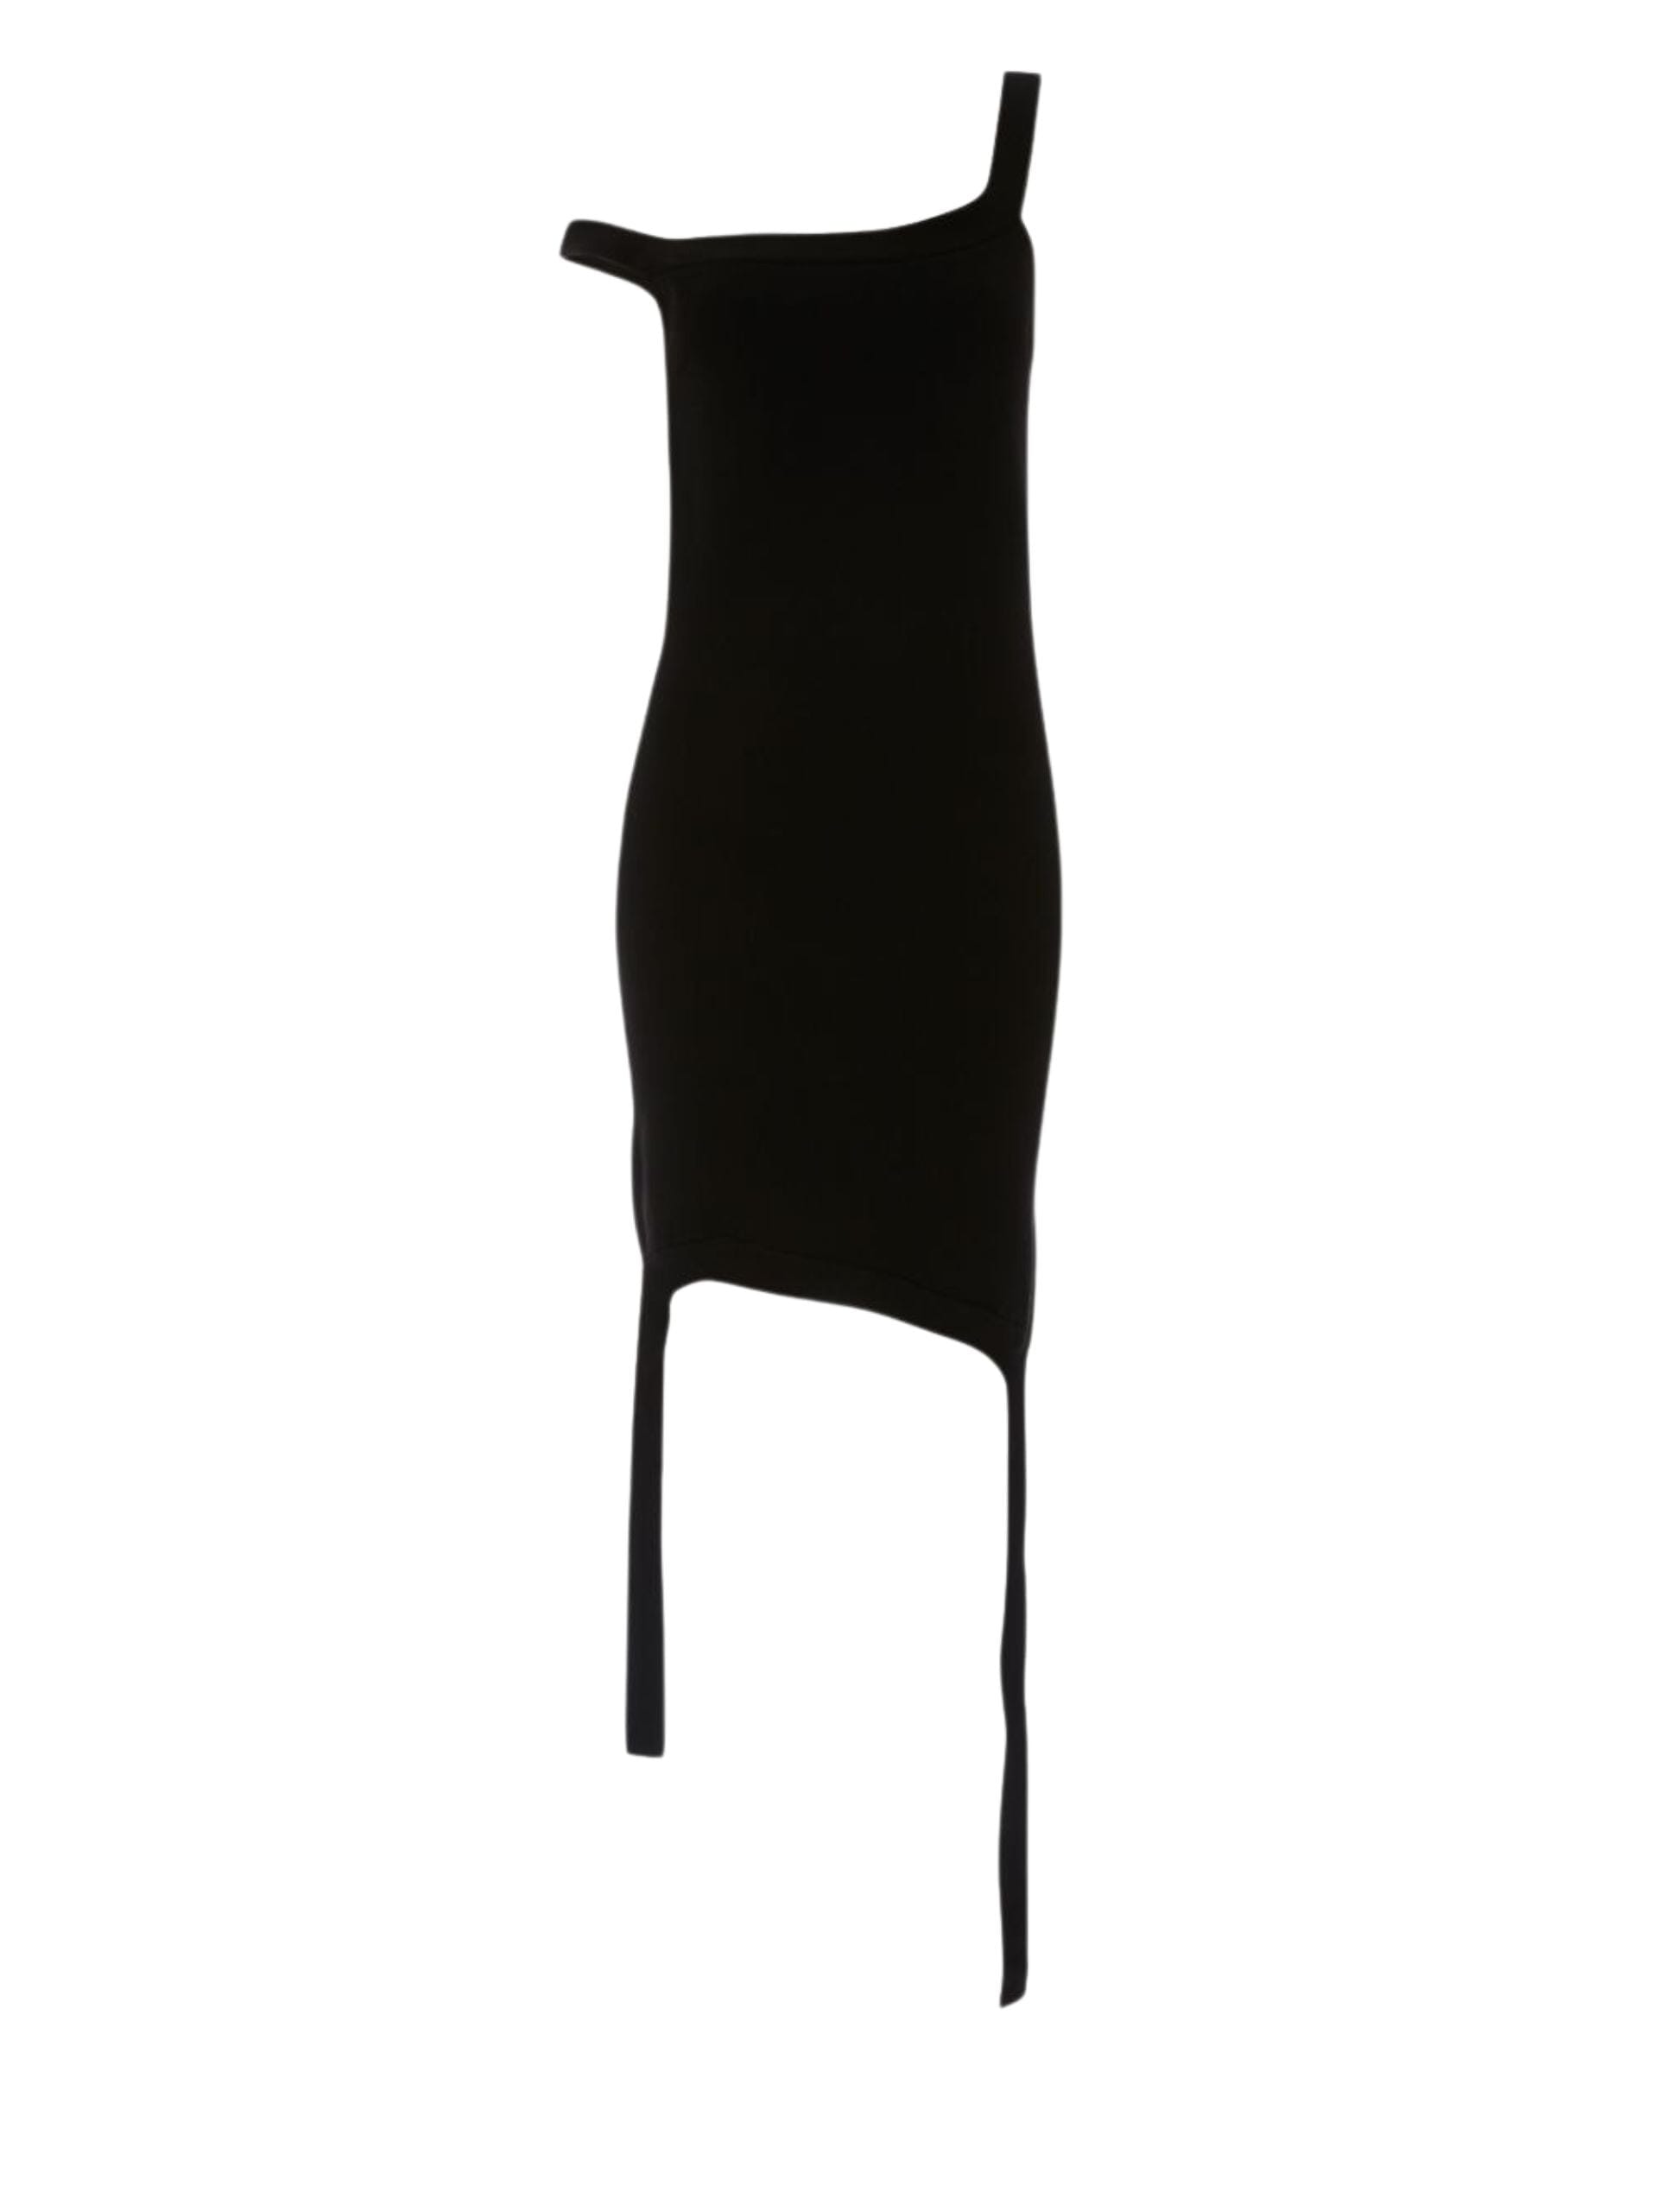 Deconstructed Dress / Black Womens JW Anderson 